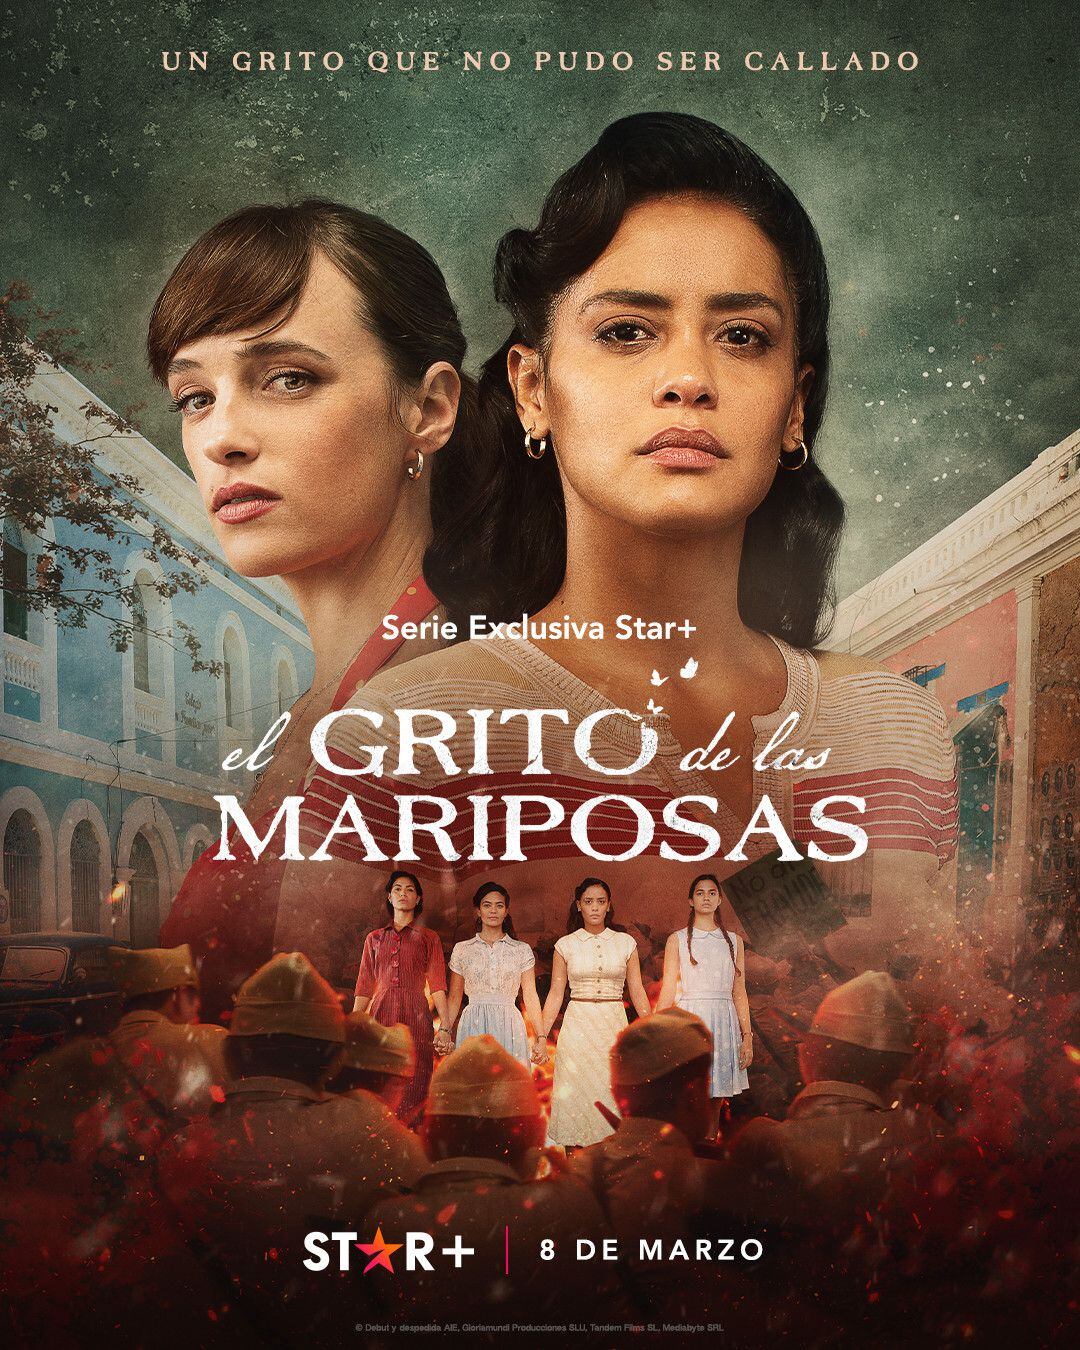 Susana Abaitua (Arantxa Oyamburu) and Sandy Hernández (Minerva Mirabal) in the official poster for 